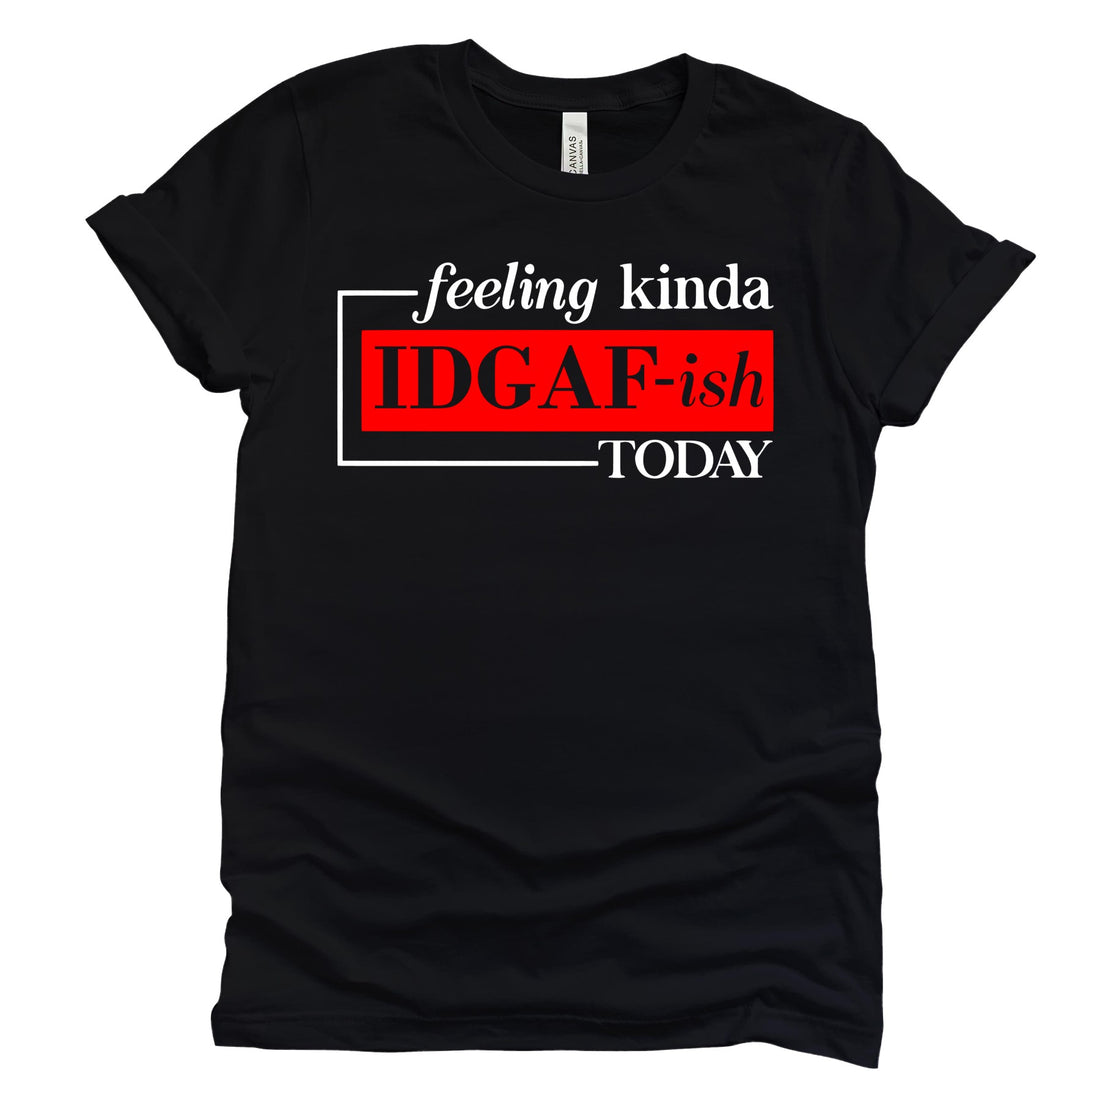 Profyle District - Feeling Kinda IDGAF-ish (Black) - T-Shirts - Black